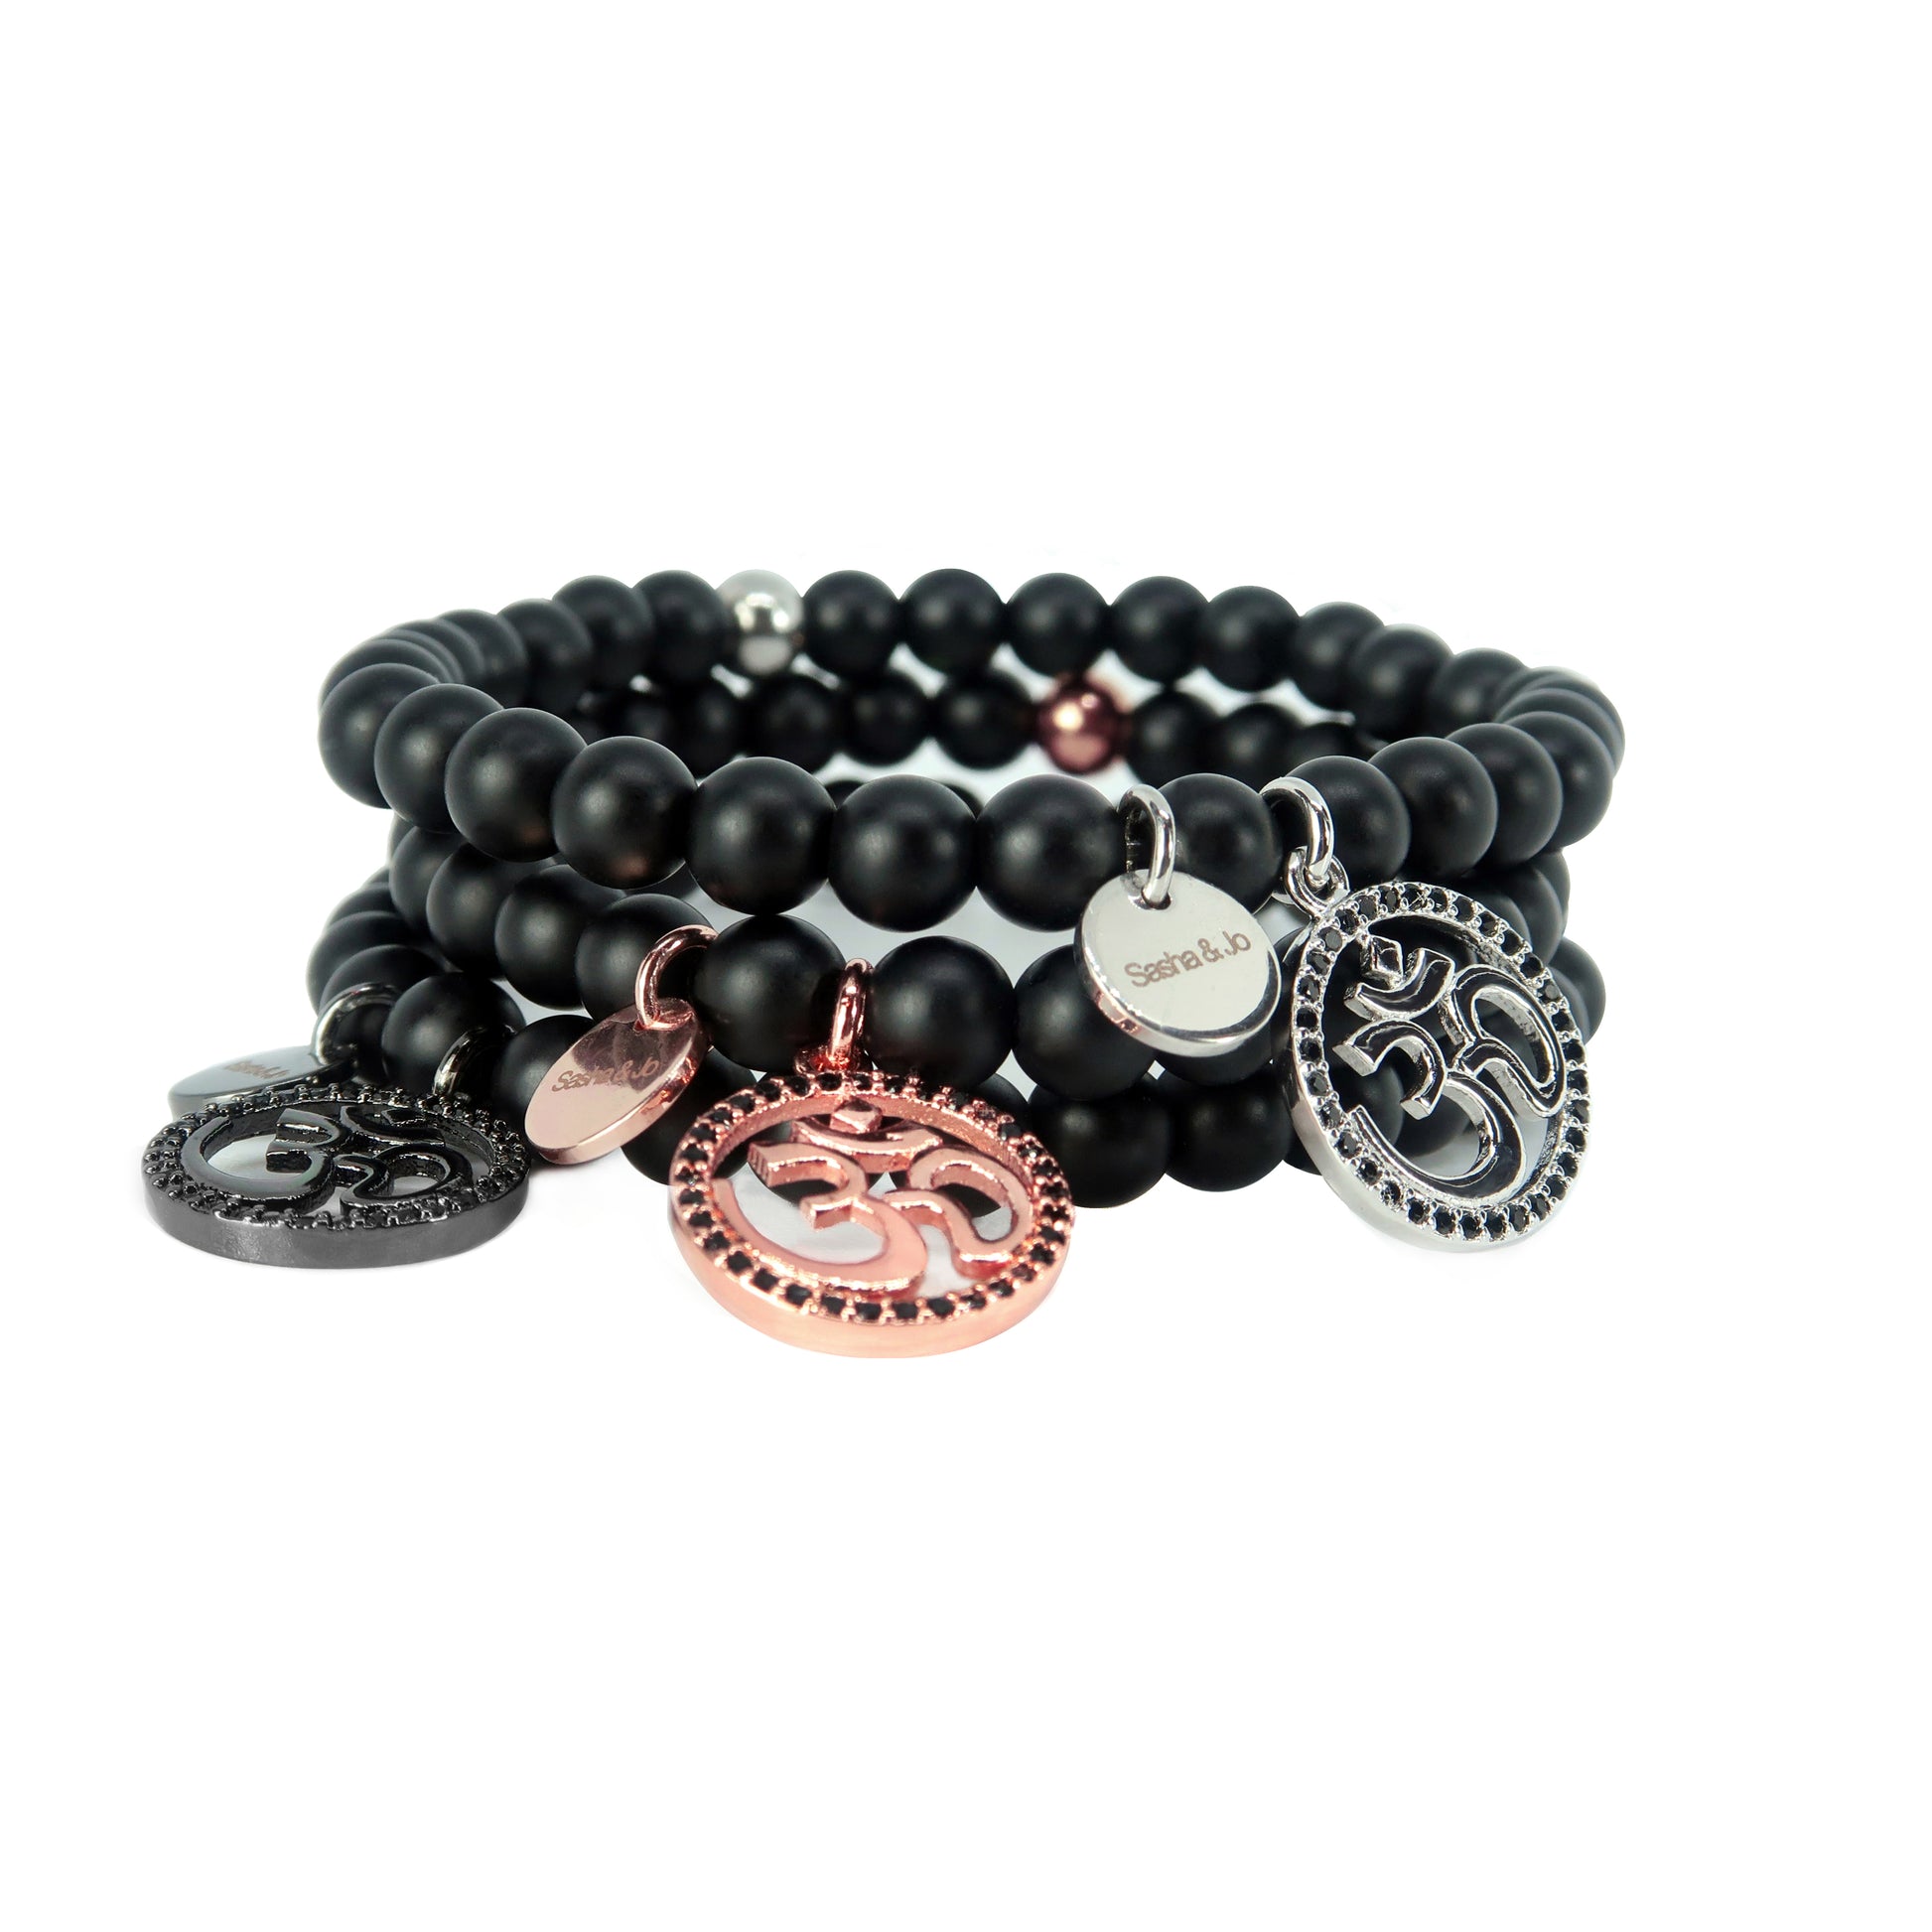 Sasha & Jo gunmetal Ohm charm with black rhinestones and onyx beads bracelet